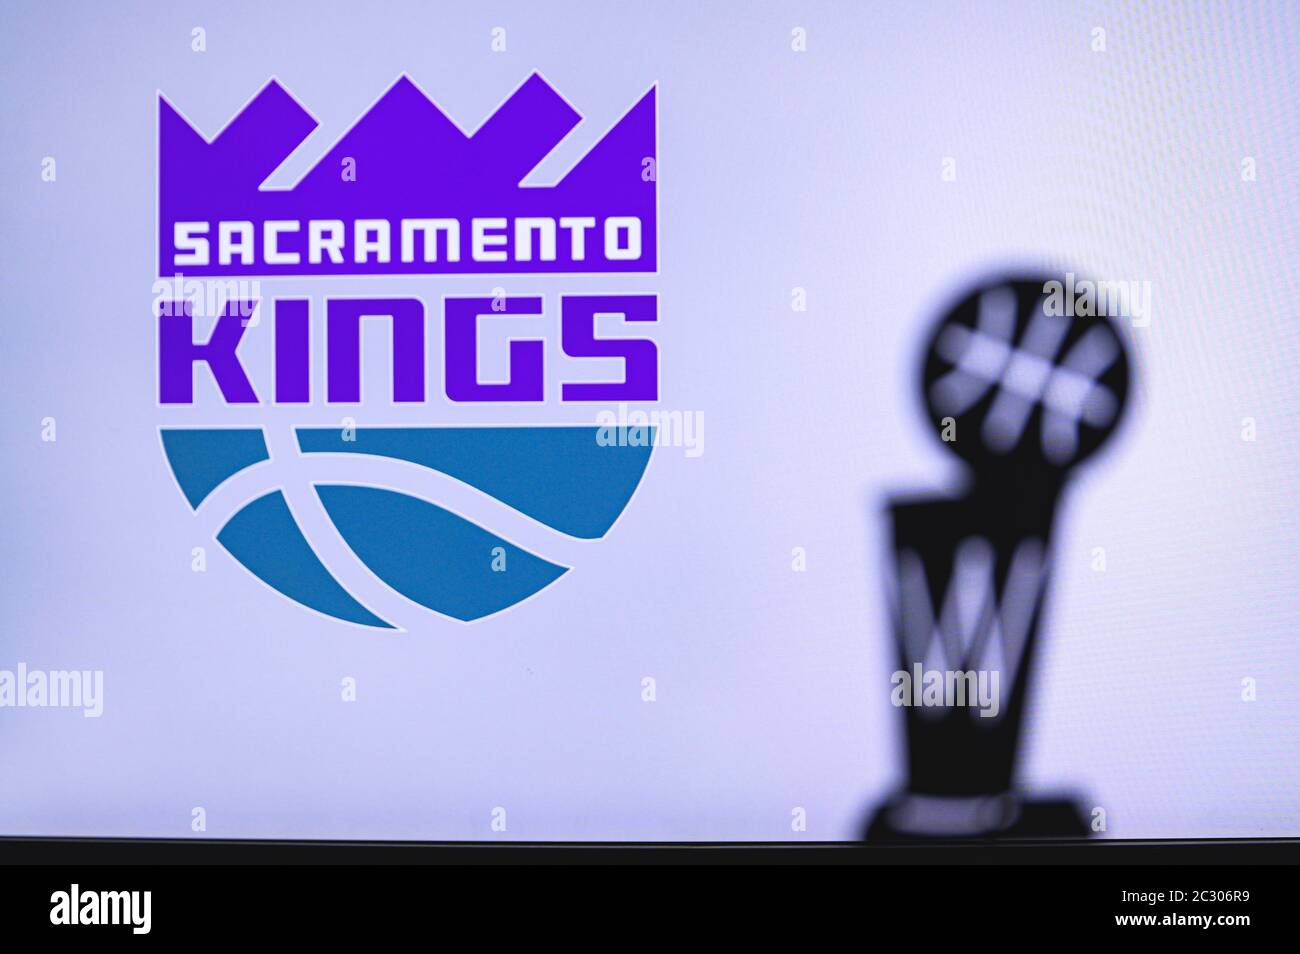 NEW YORK, USA, JUN 18, 2020: Sacramento Kings Basketball club on the white  screen. Silhouette of NBA trophy in foreground Stock Photo - Alamy